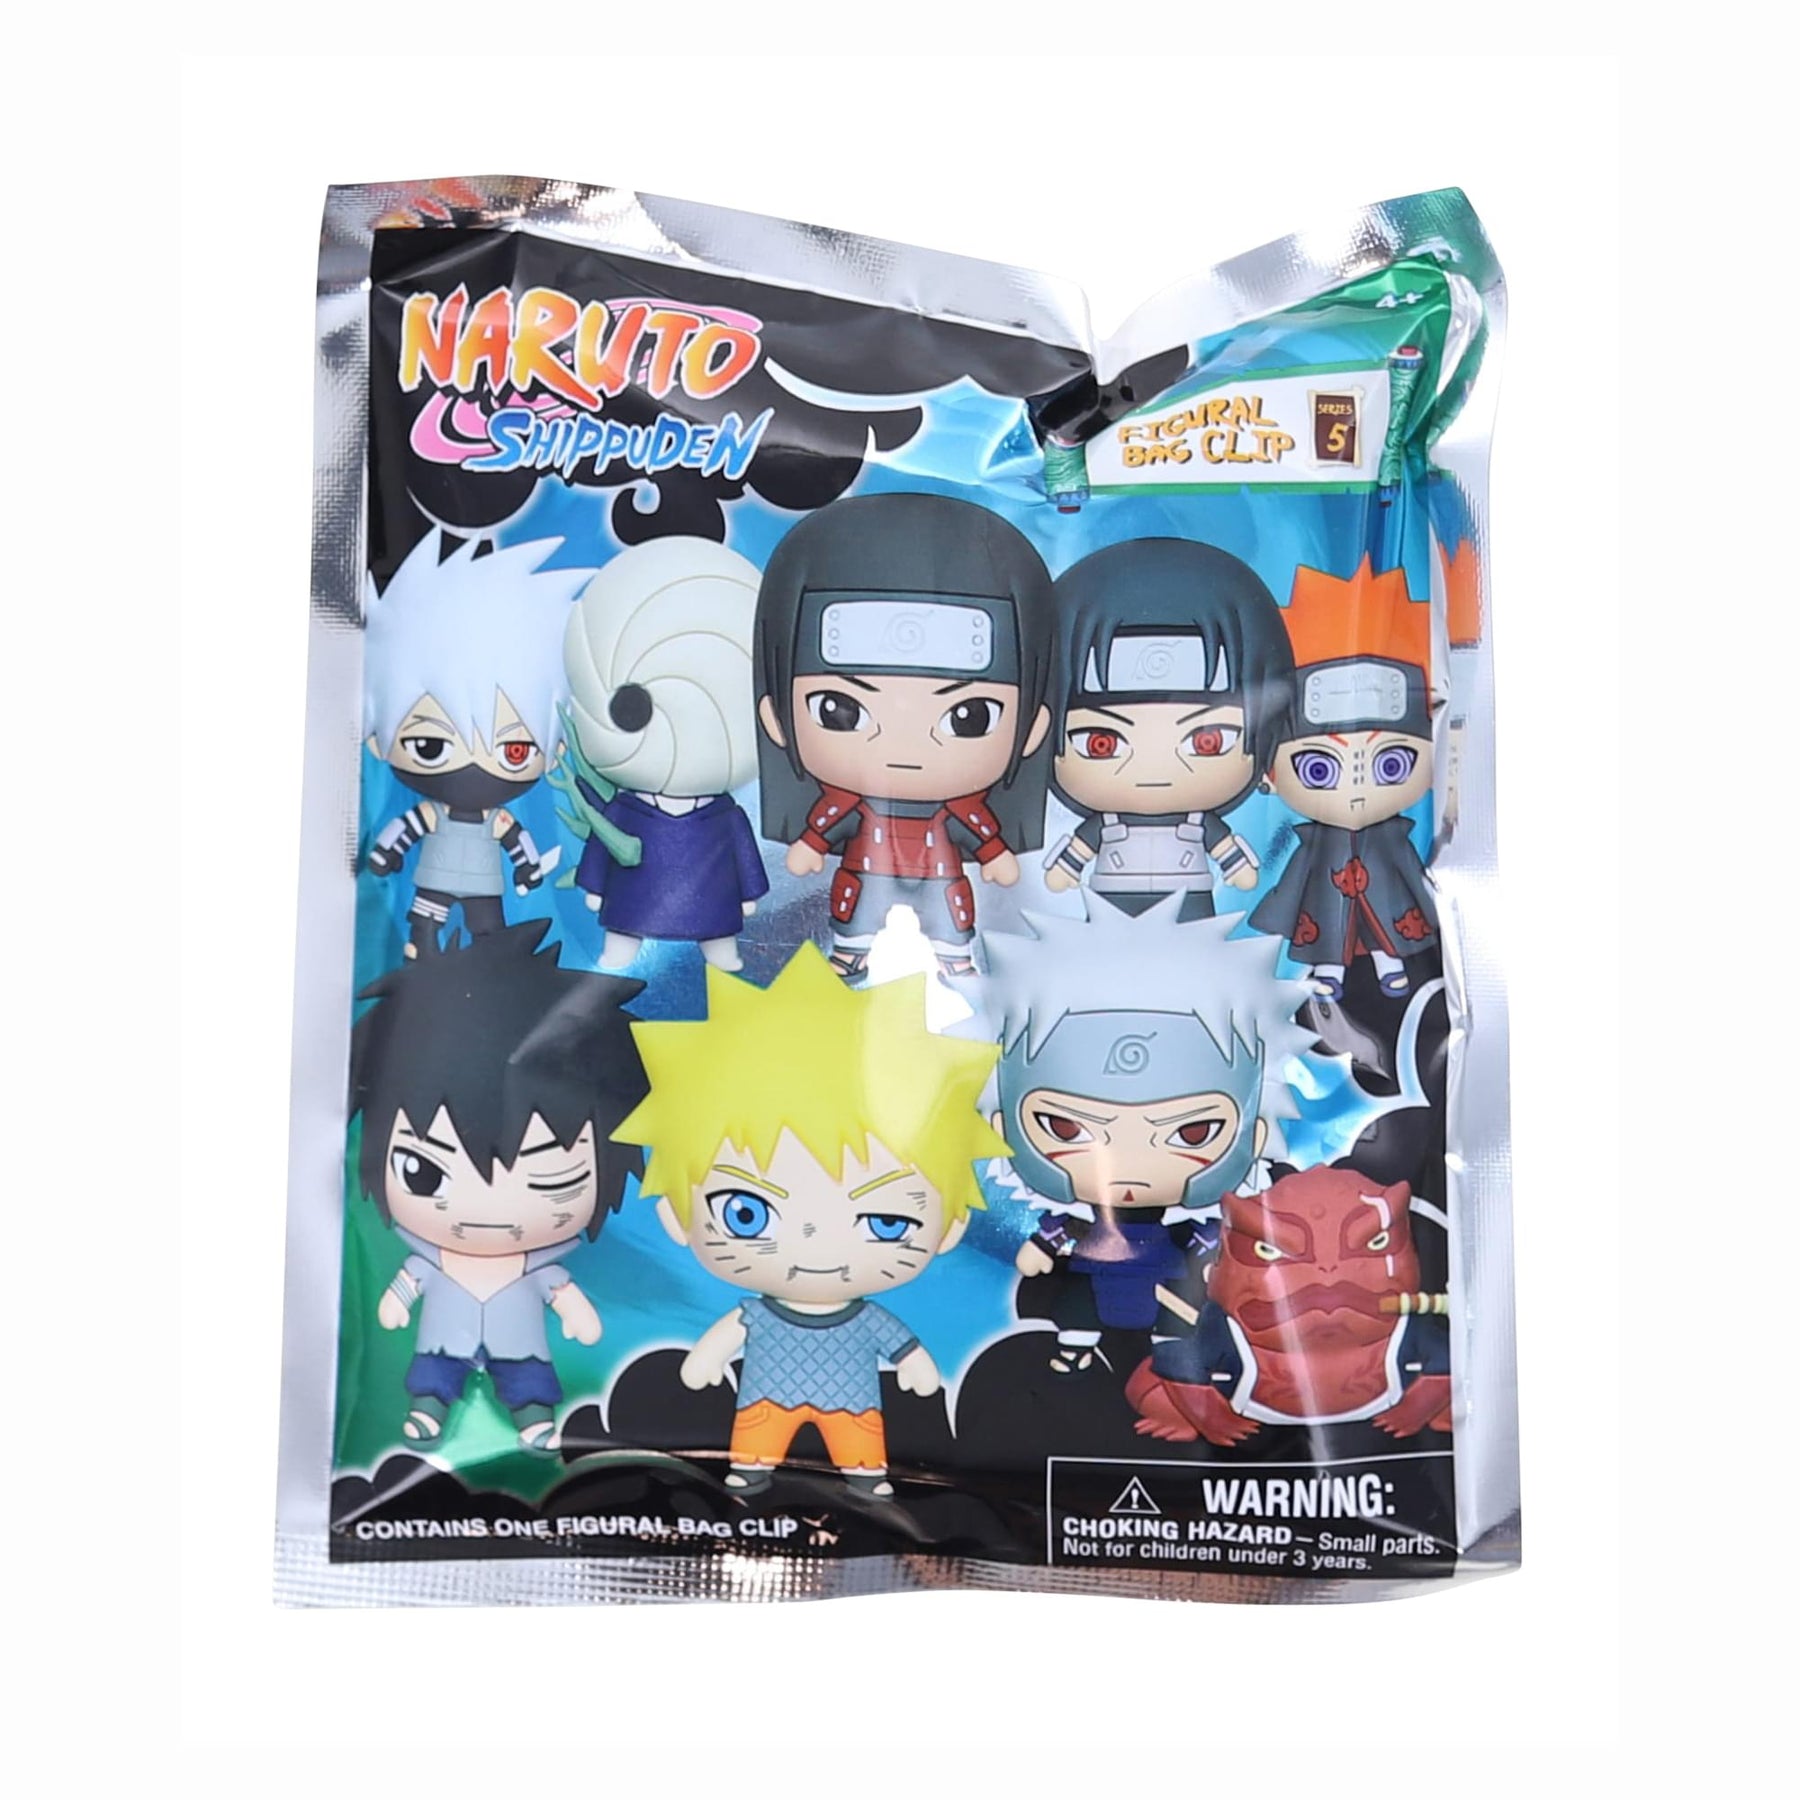 Naruto Shippuden Series 3 3D Foam Bag Clip